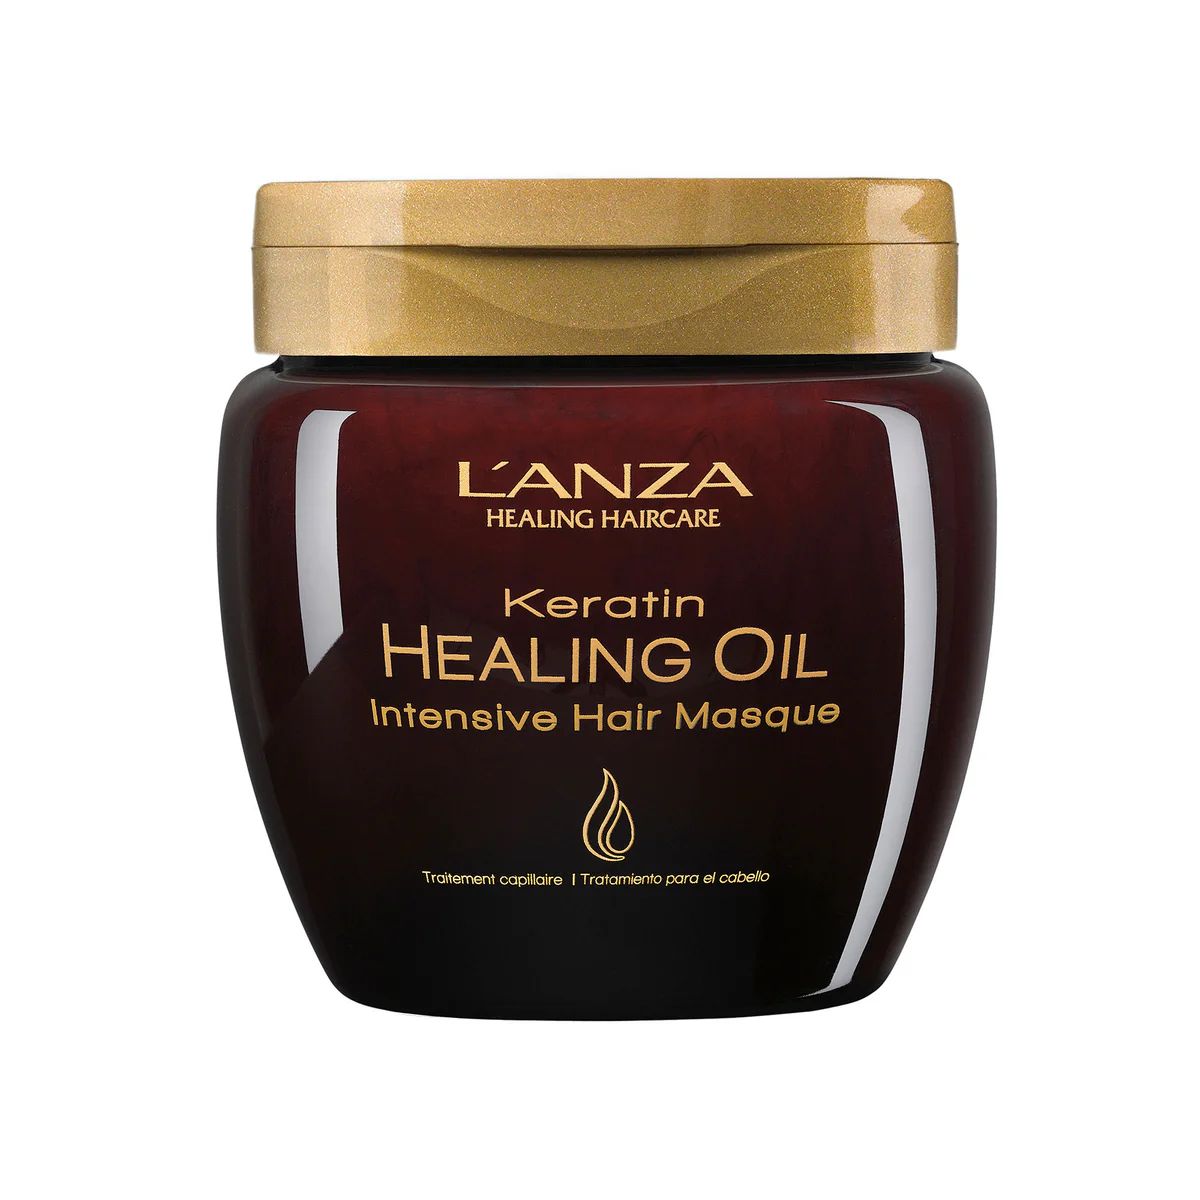 L'anza -  Keratin Healing Oil Intensive Hair Masque | NewCo Beauty